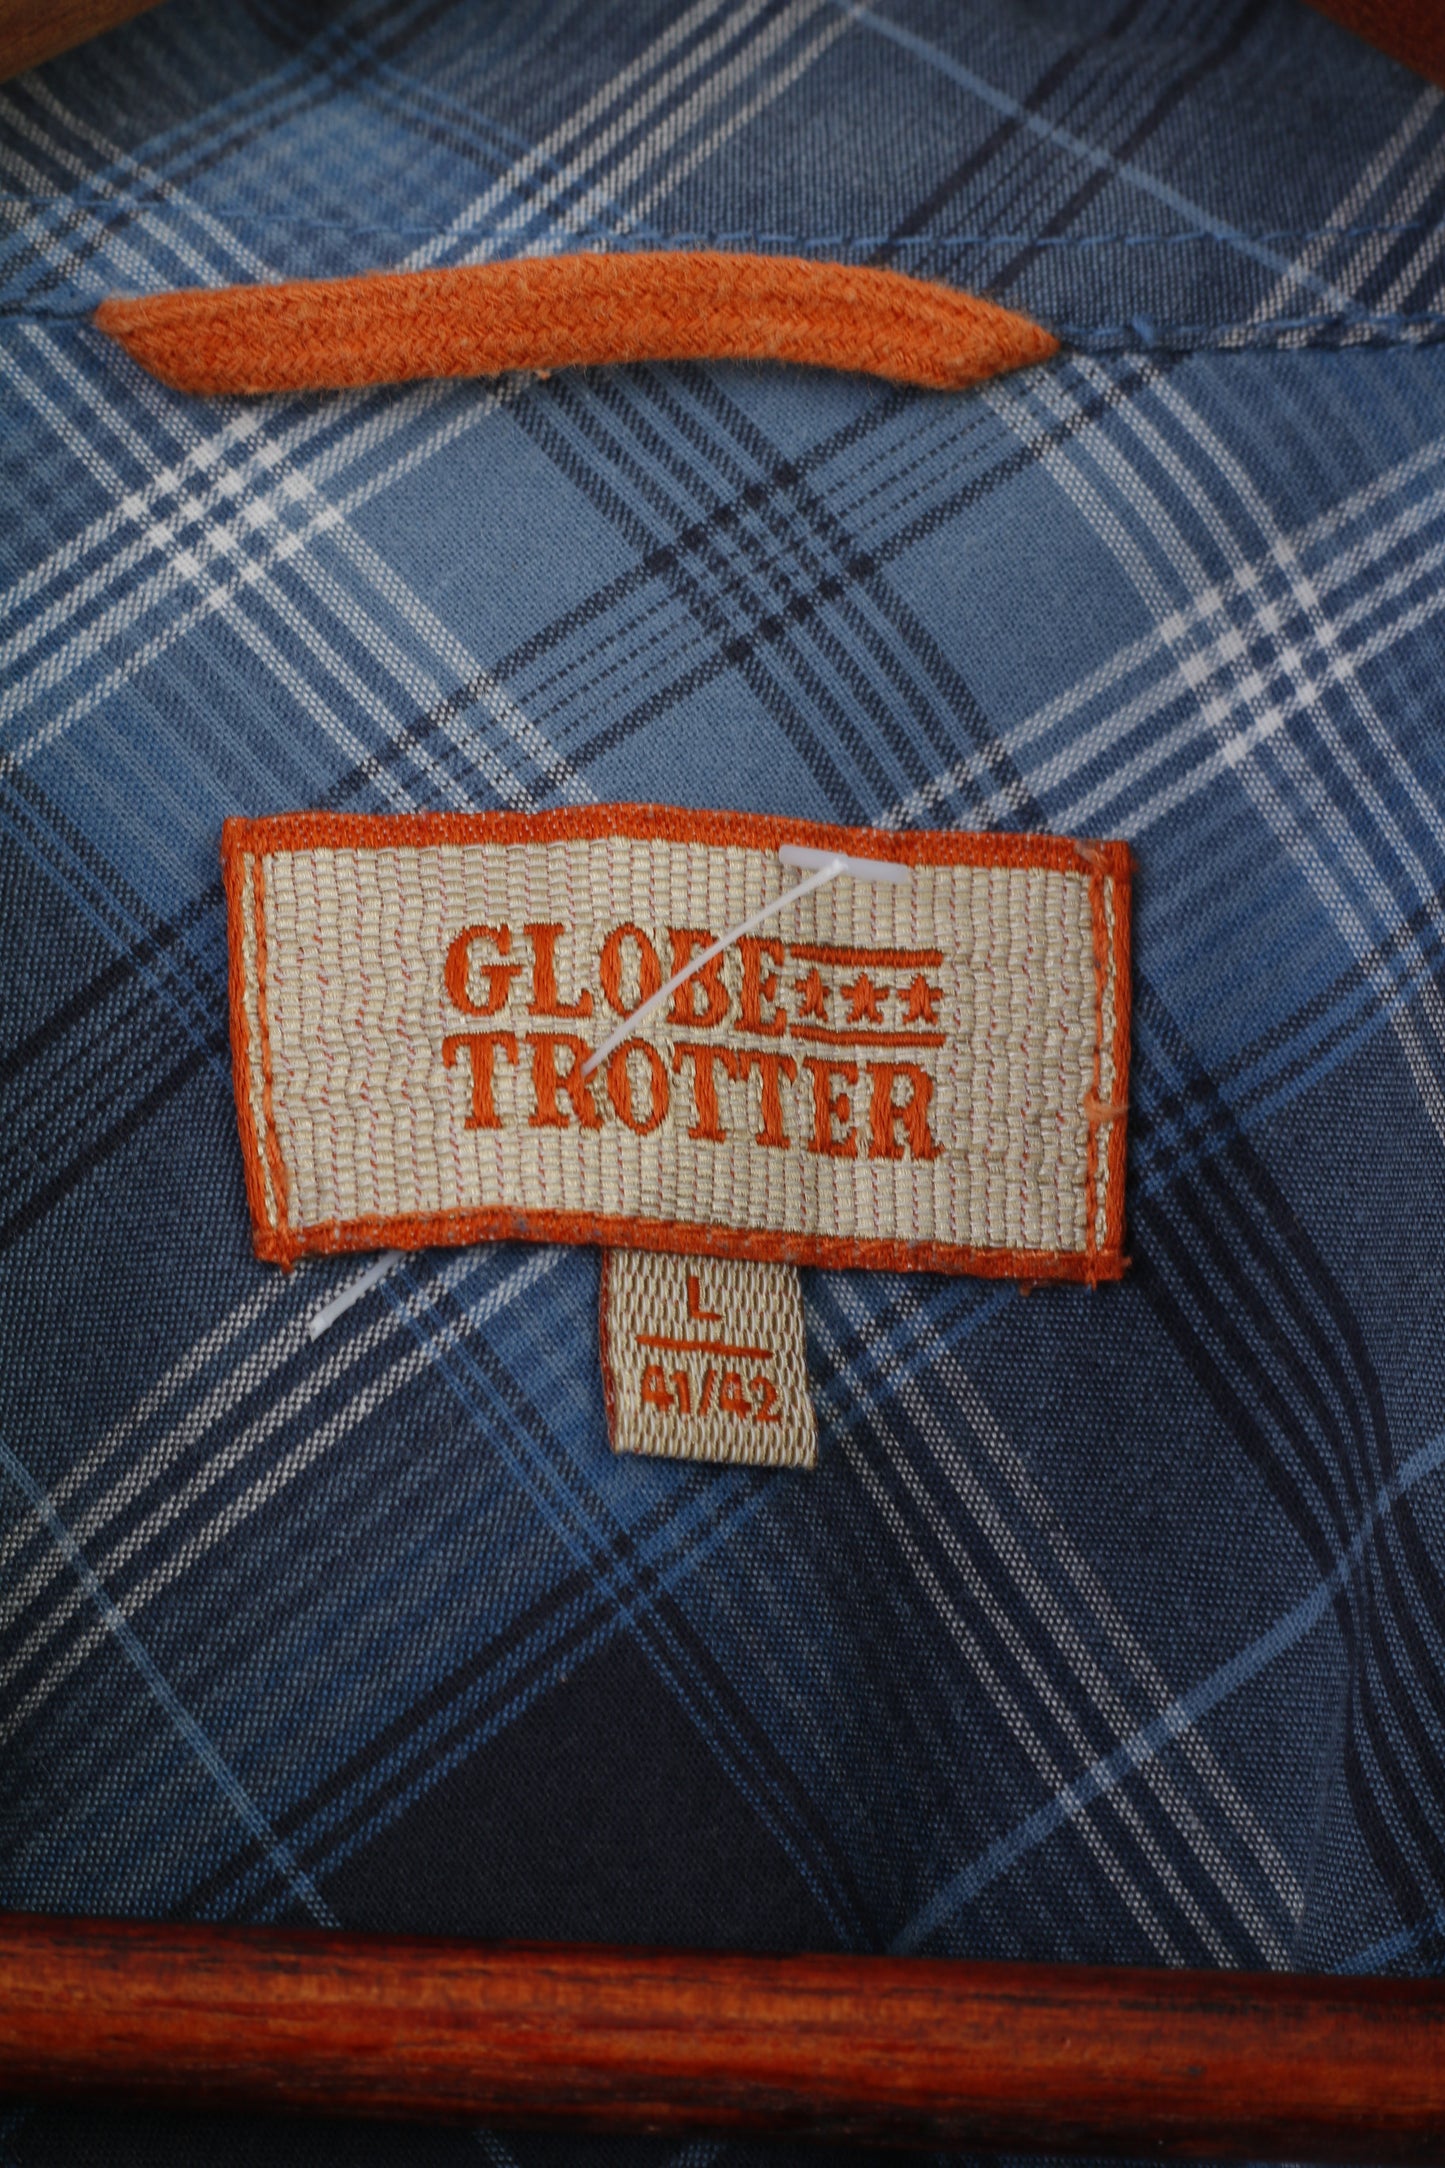 Globetrotter Men L 4142 Casual Shirt Checkered  Down Collar Blue Long Sleeve Cotton Top